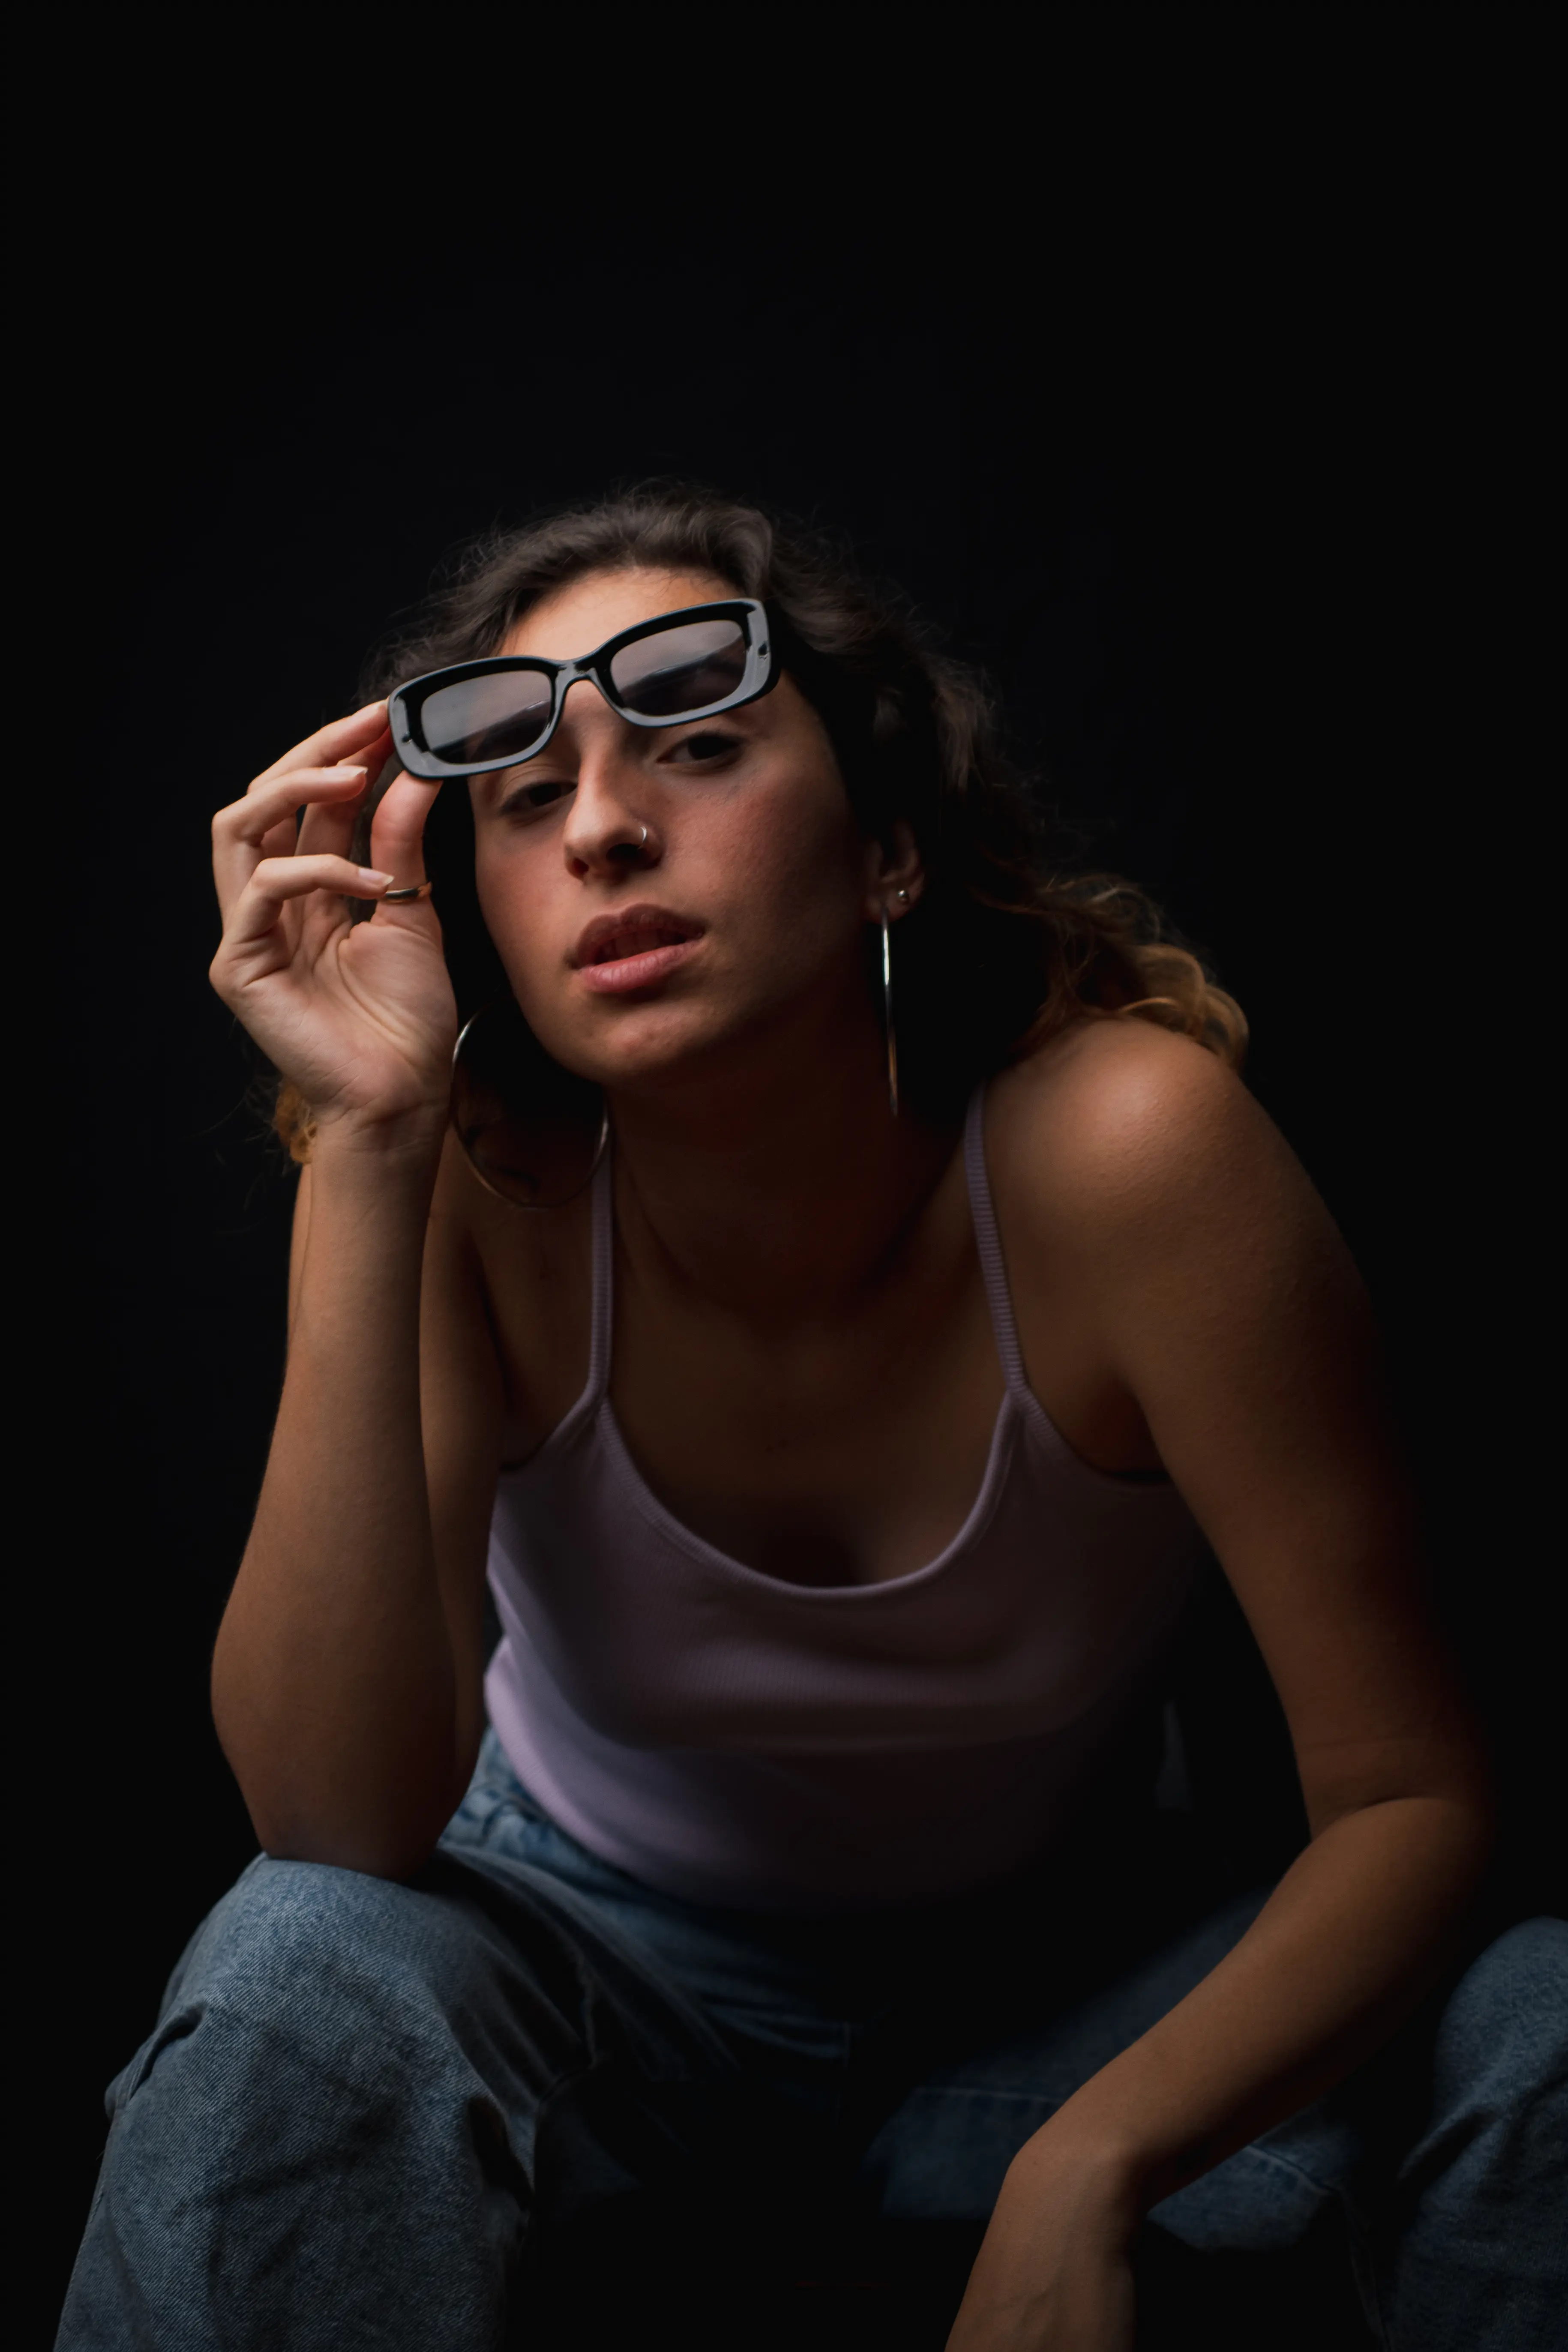 Femme enlevant ses lunettes - jyp-production - photographe strasbourg alsace